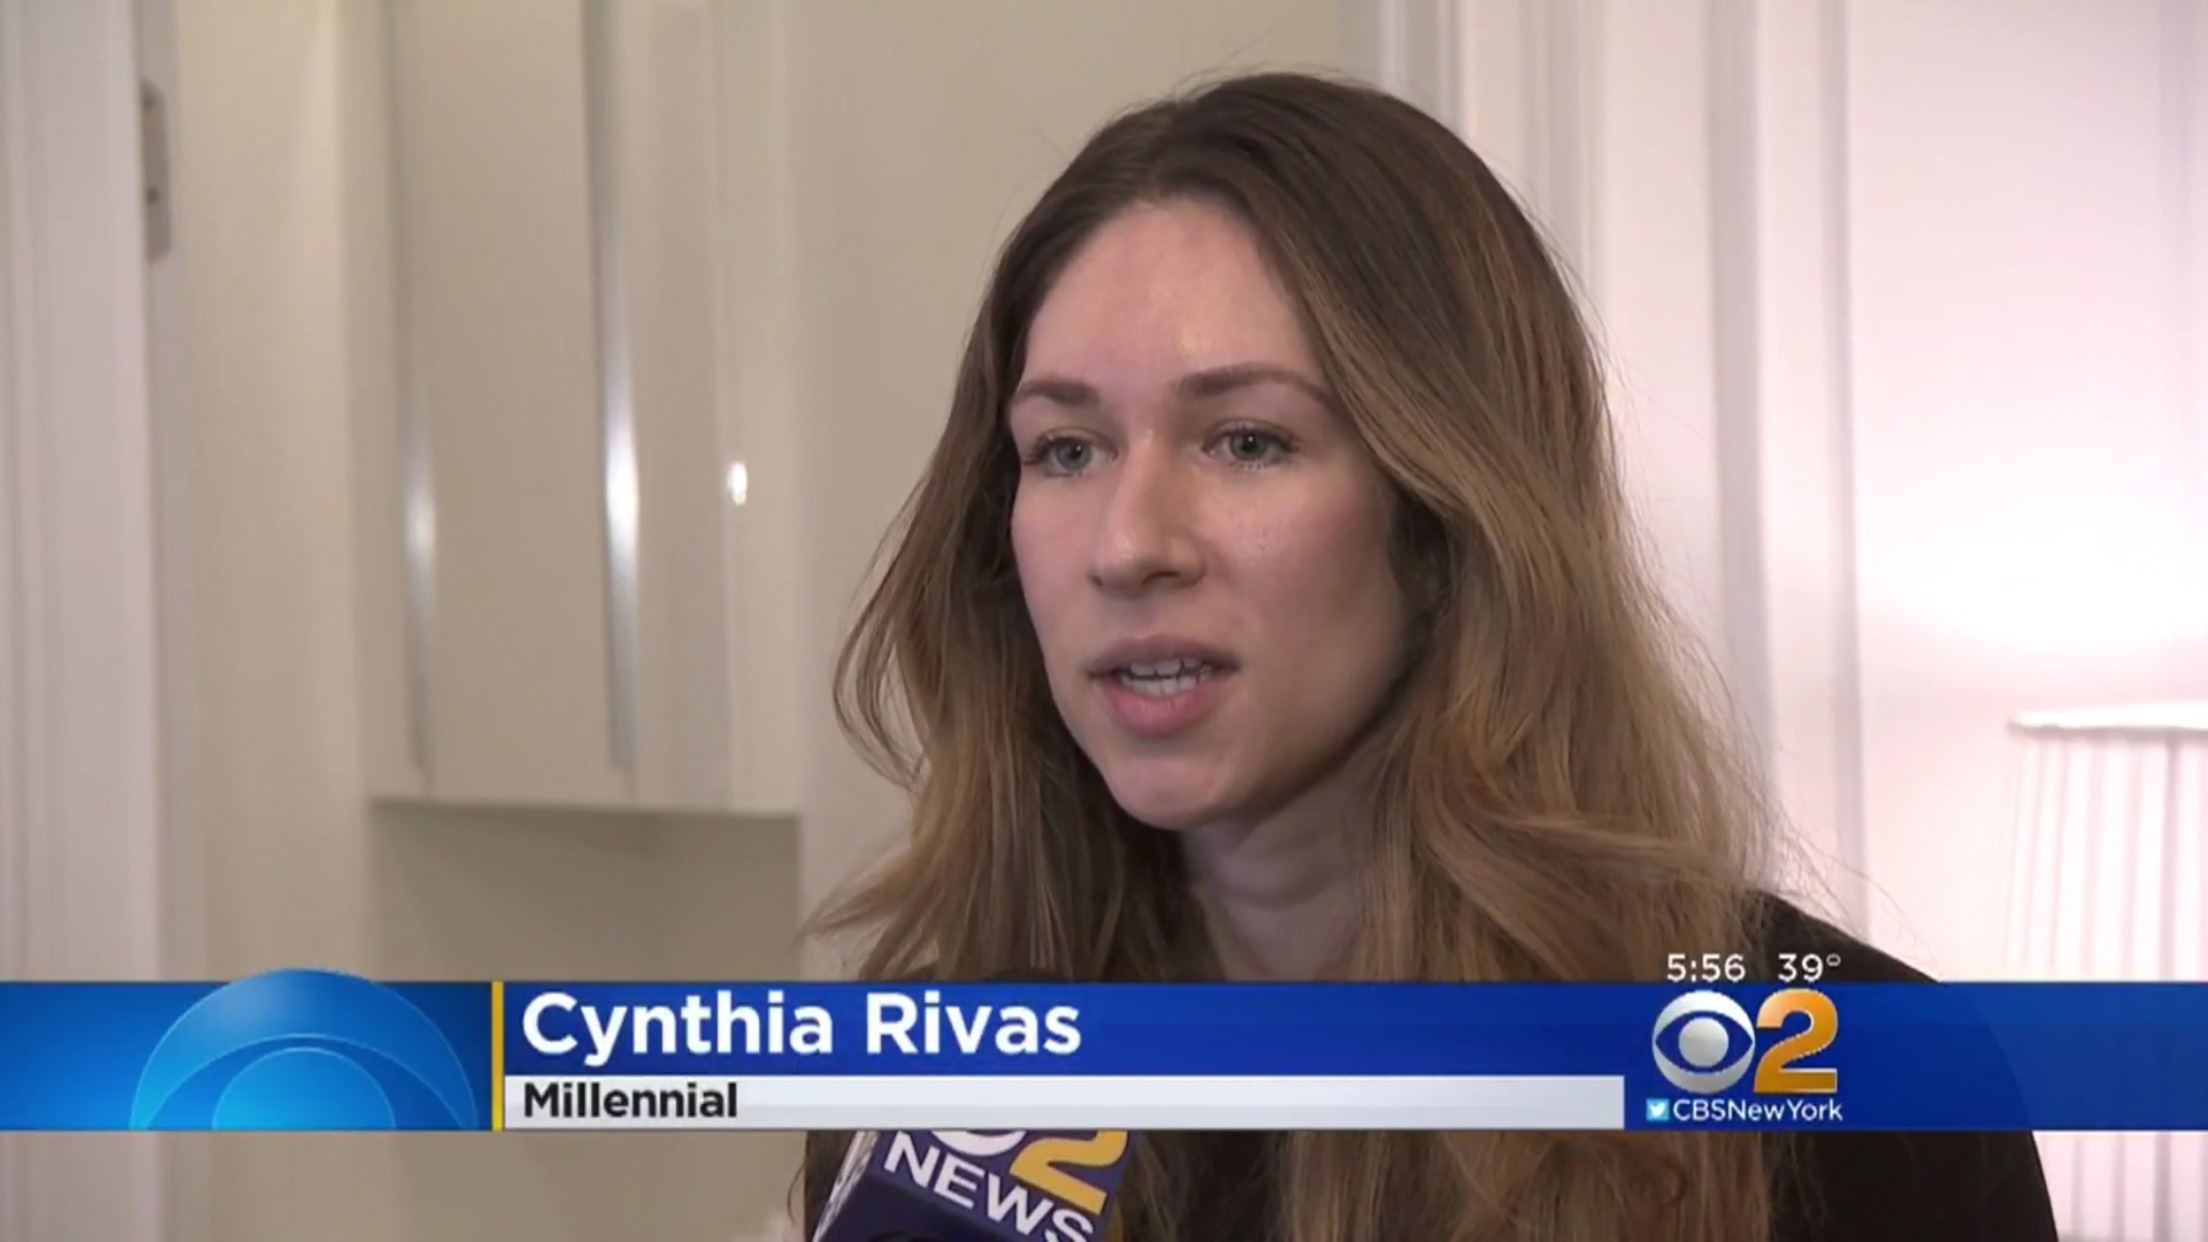 Cynthia Rivas: Millennial